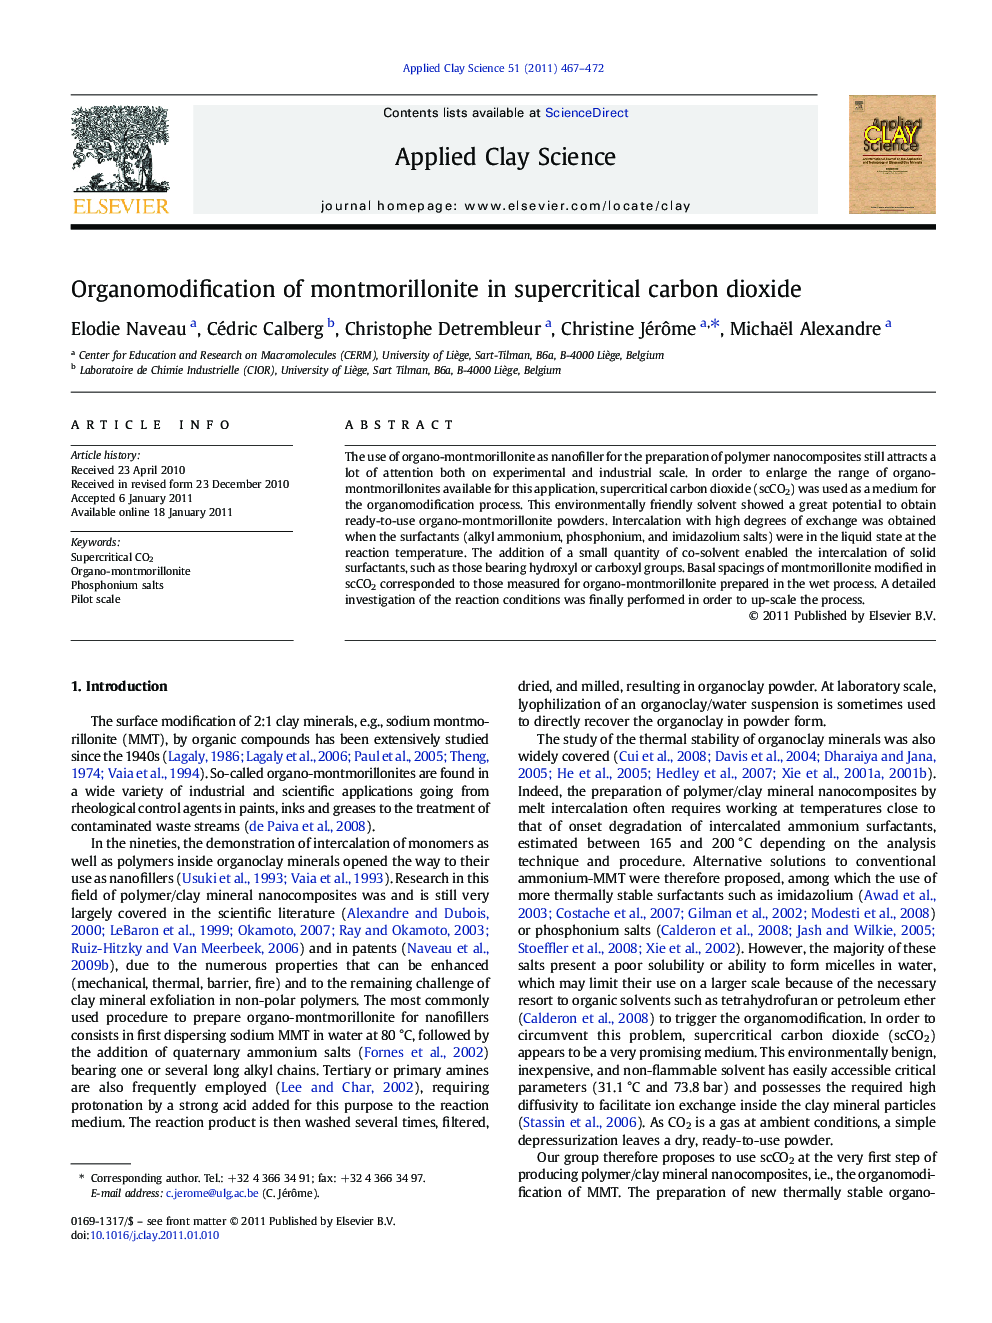 Organomodification of montmorillonite in supercritical carbon dioxide